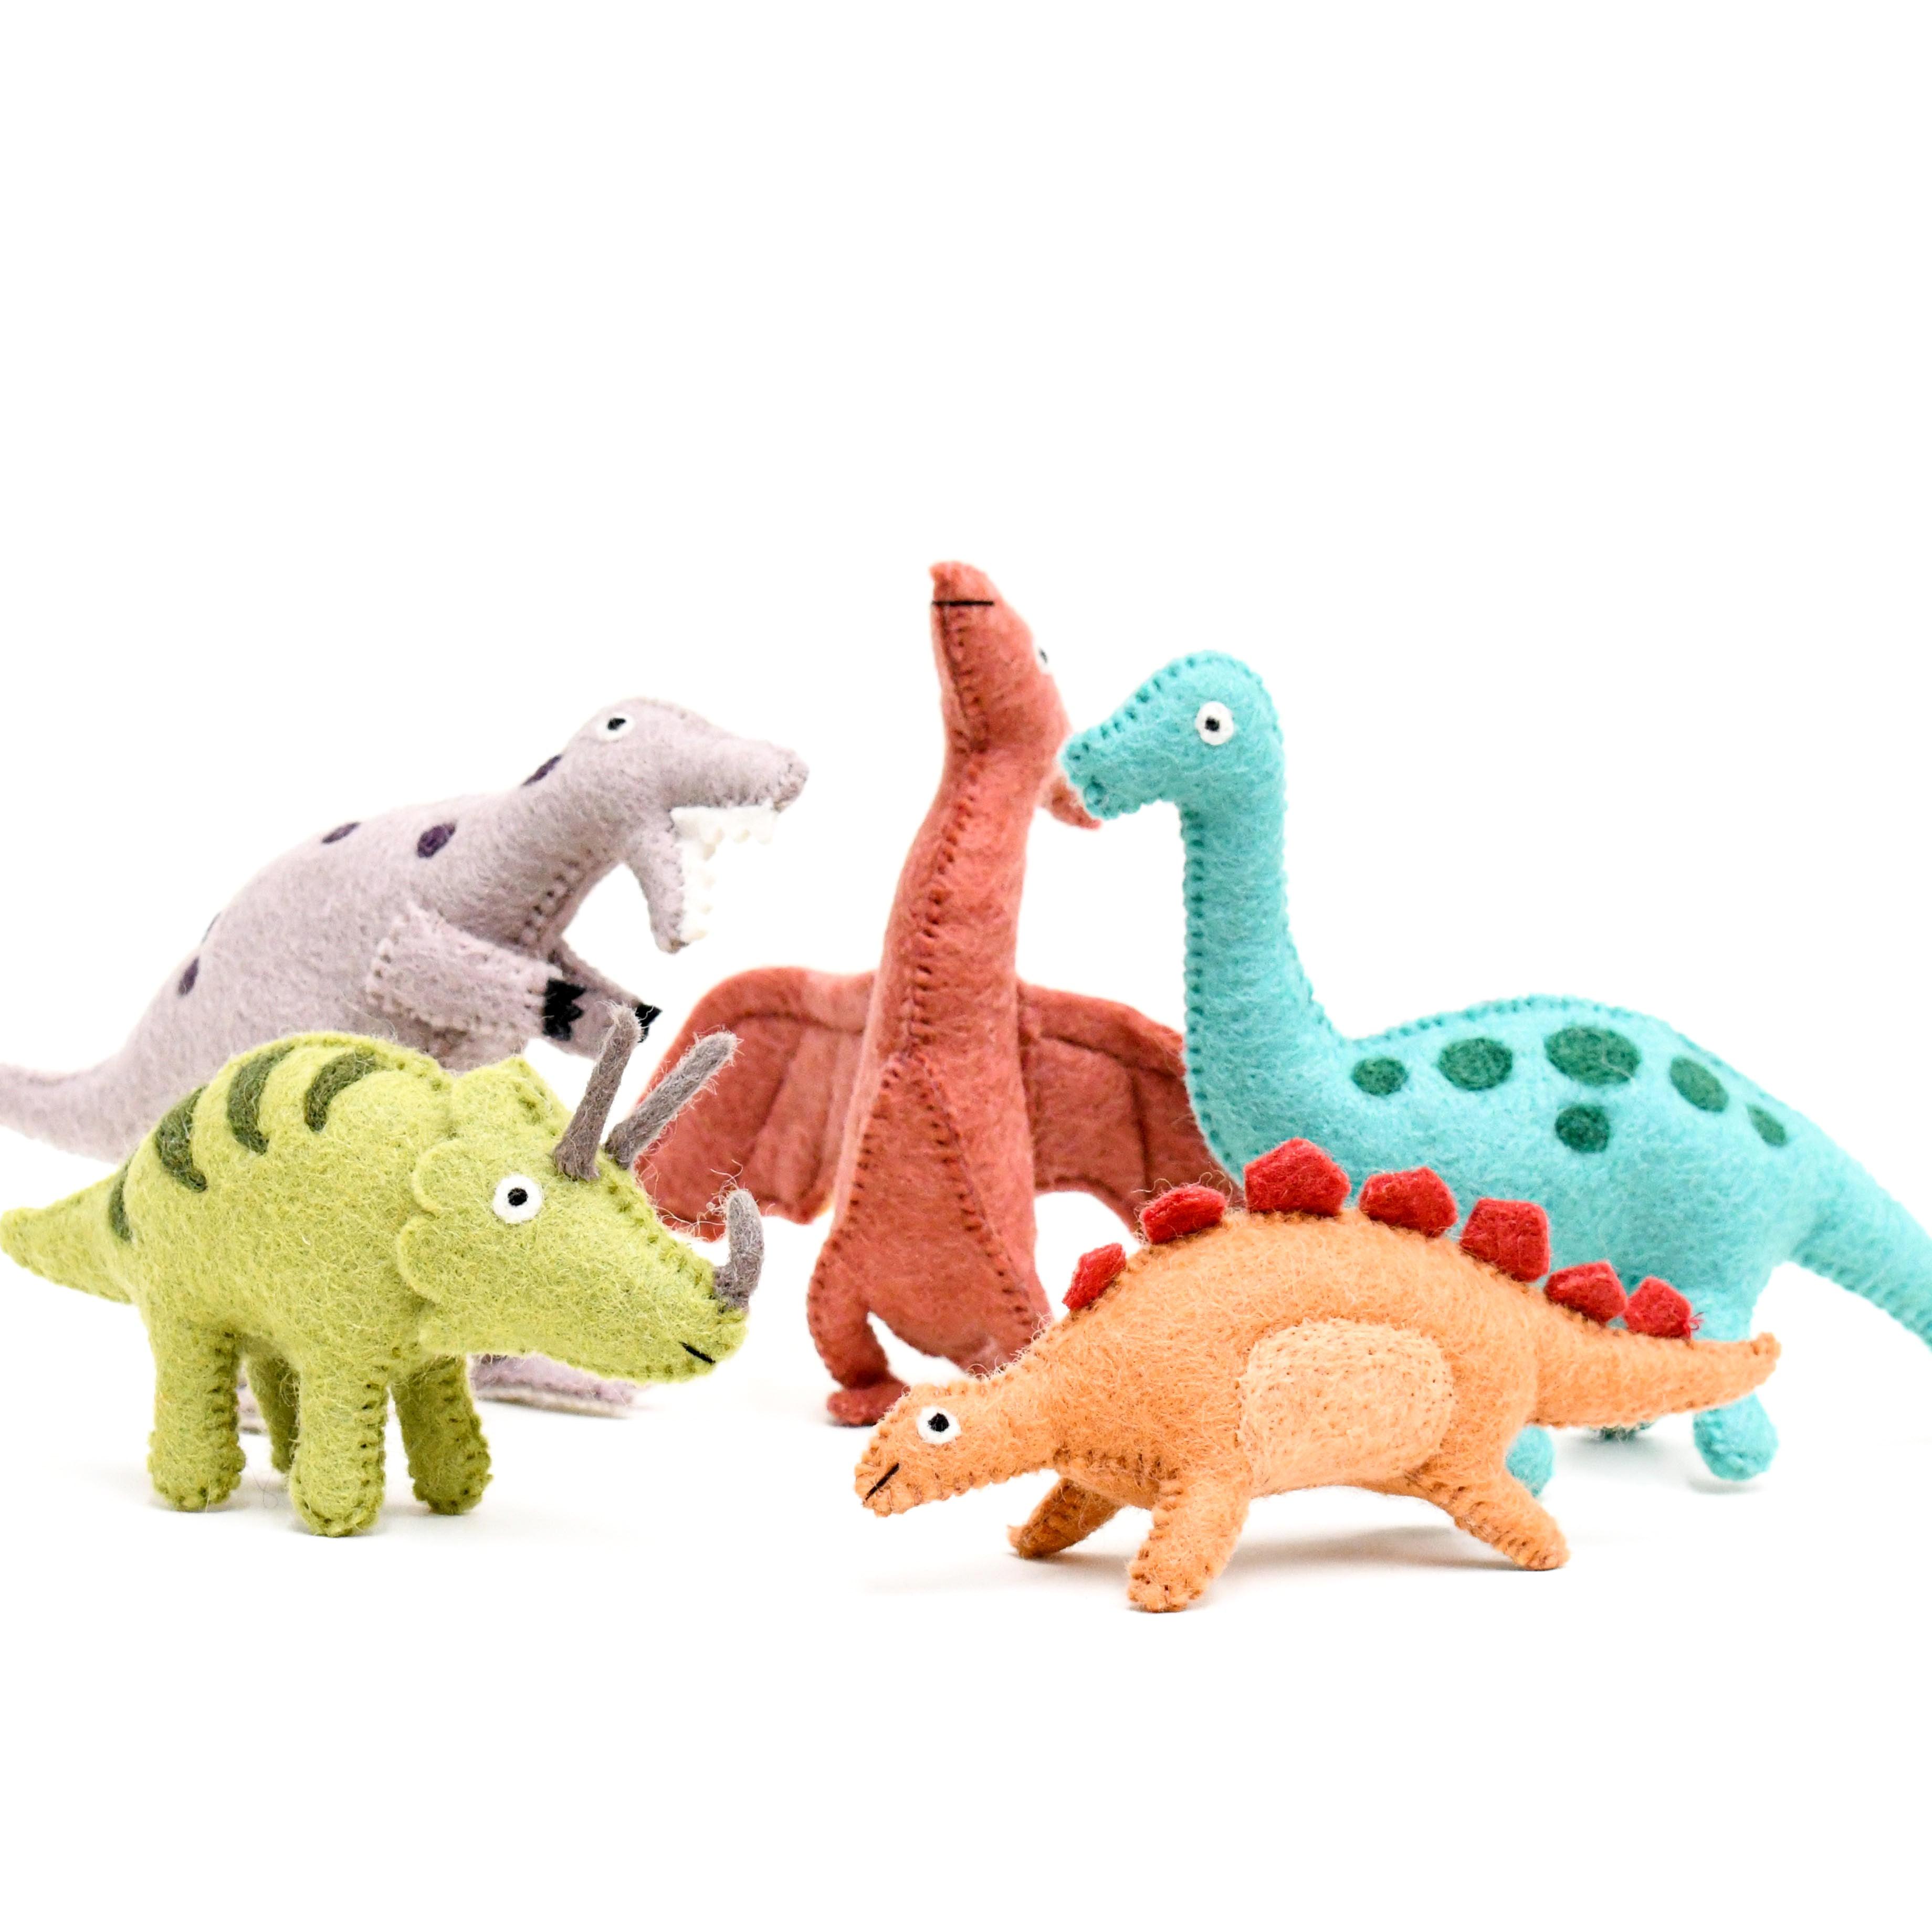 Felt Triceratops Dinosaur Toy - Tara Treasures